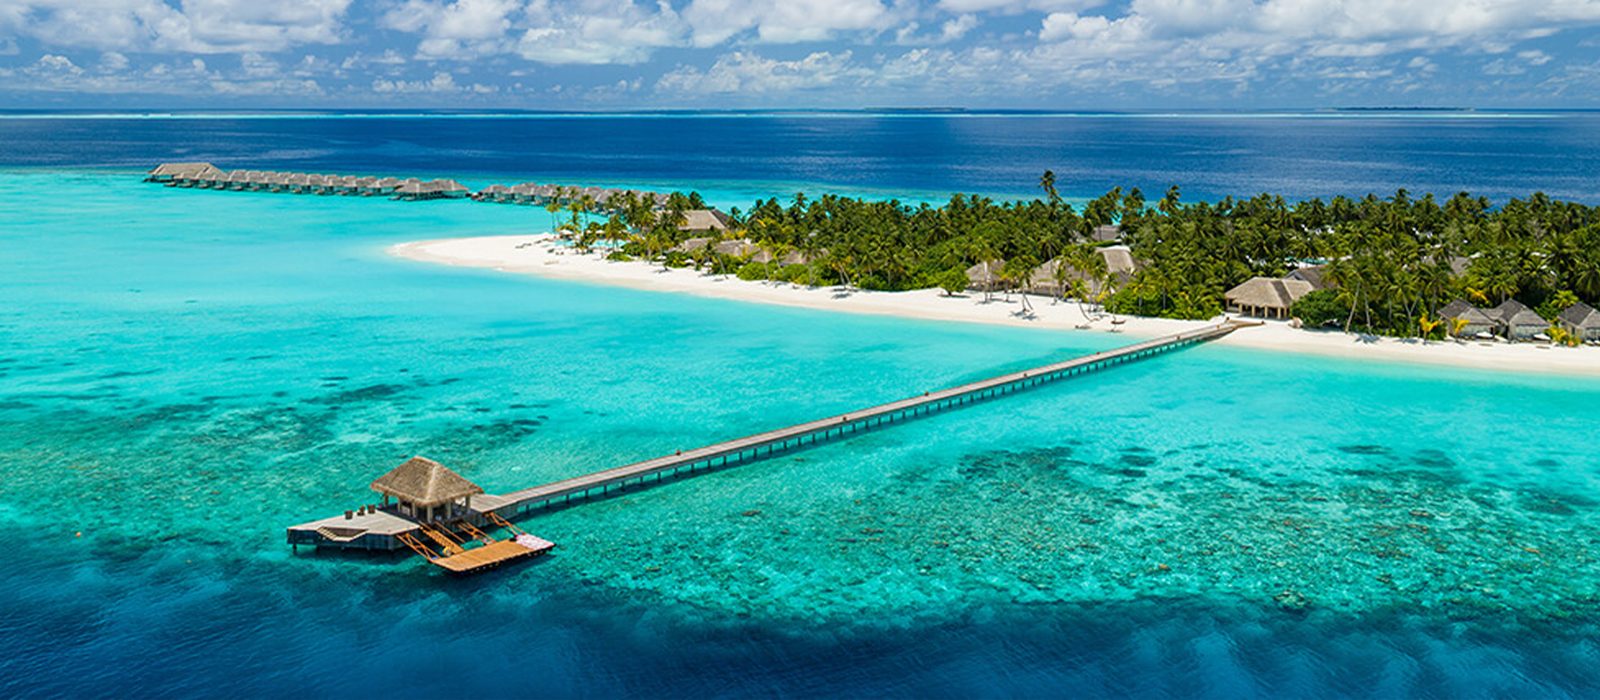 Luxury Maldives Holiday Packages Baglioni Maldives Resorts Header1